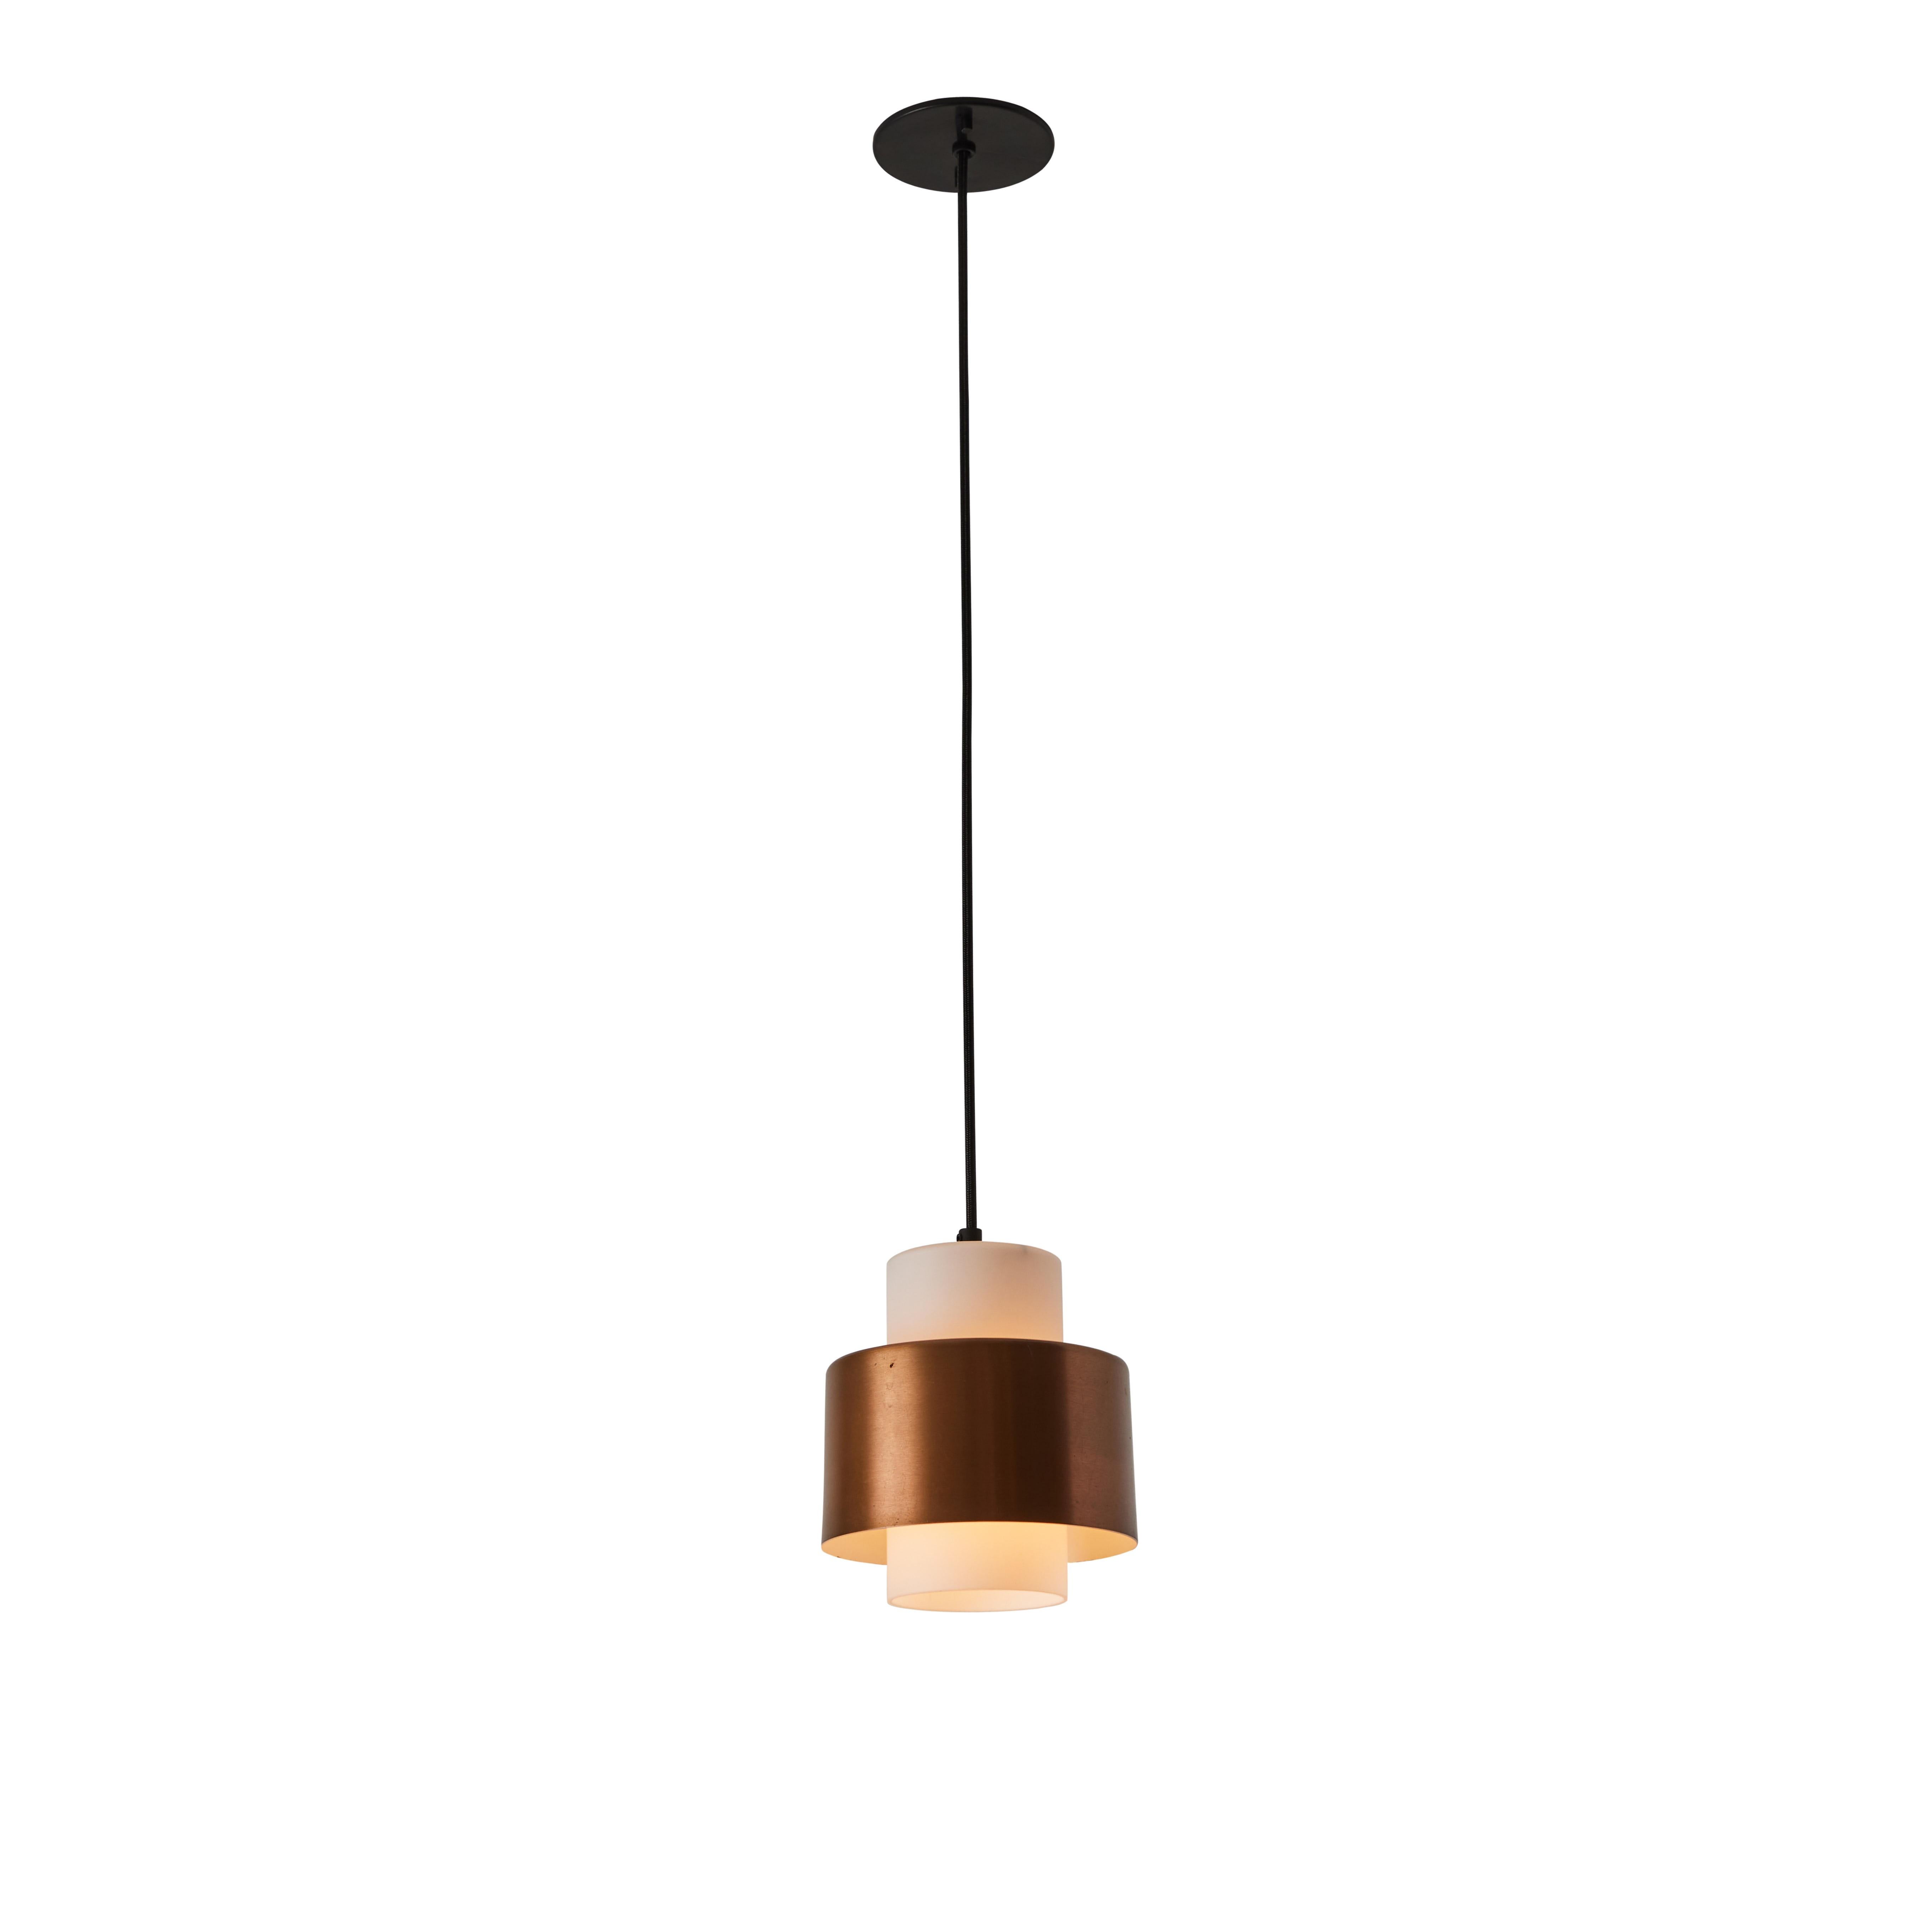 1960s Opaline Glass & Copper Pendant Lamp Attributed to Stilnovo For Sale 3